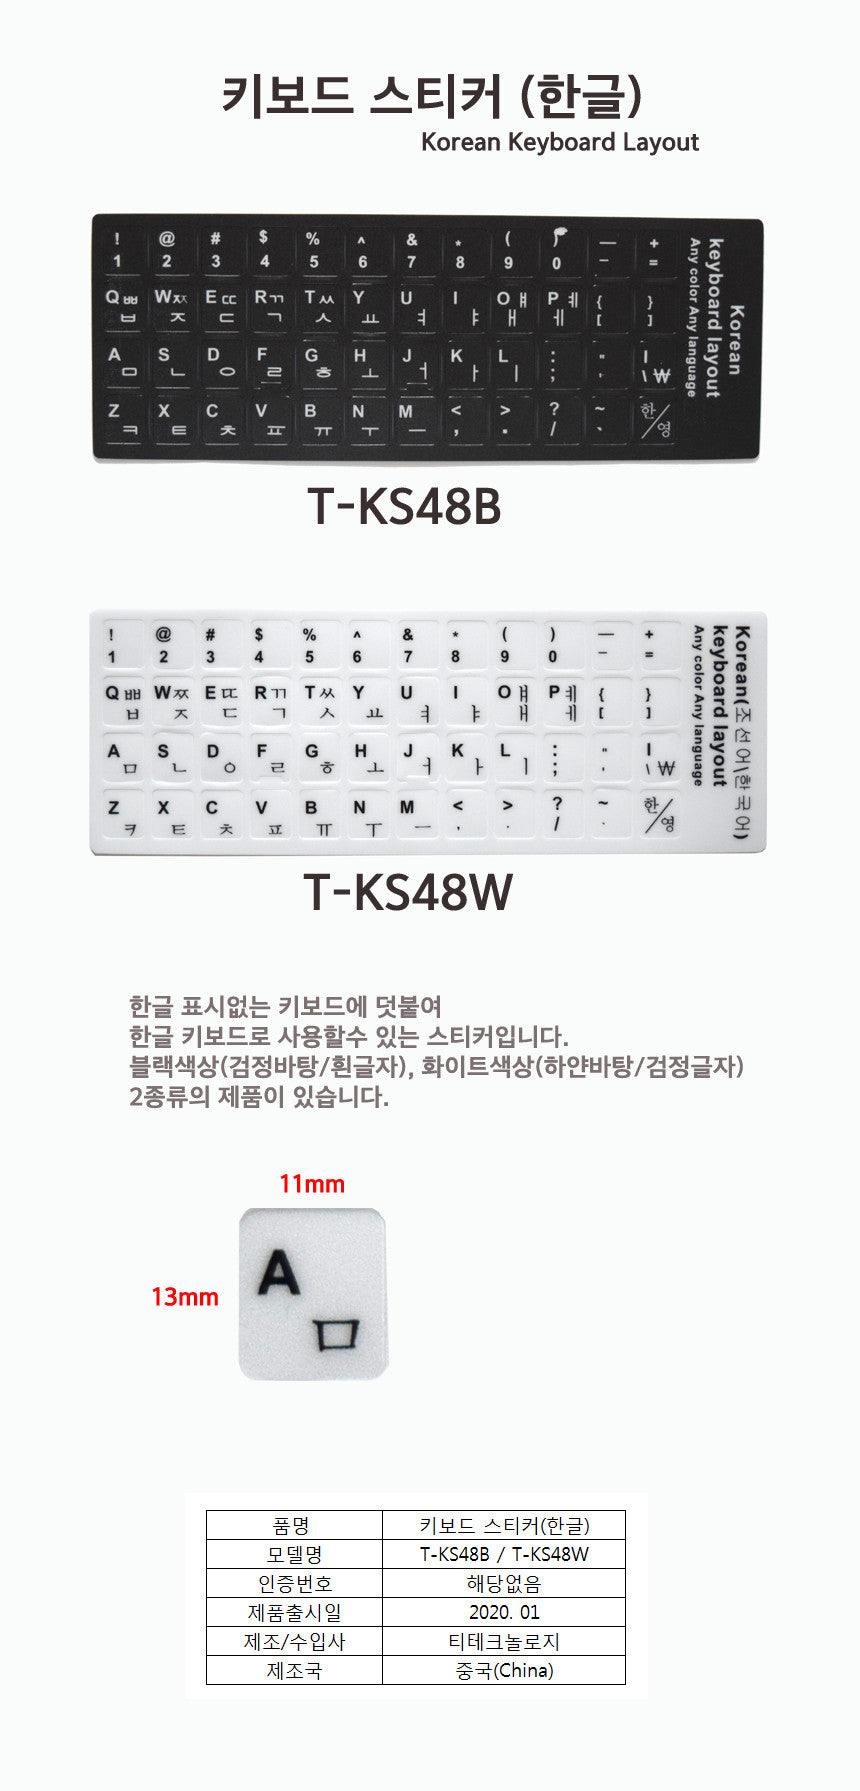 Korean Keyboard Layout Sticker